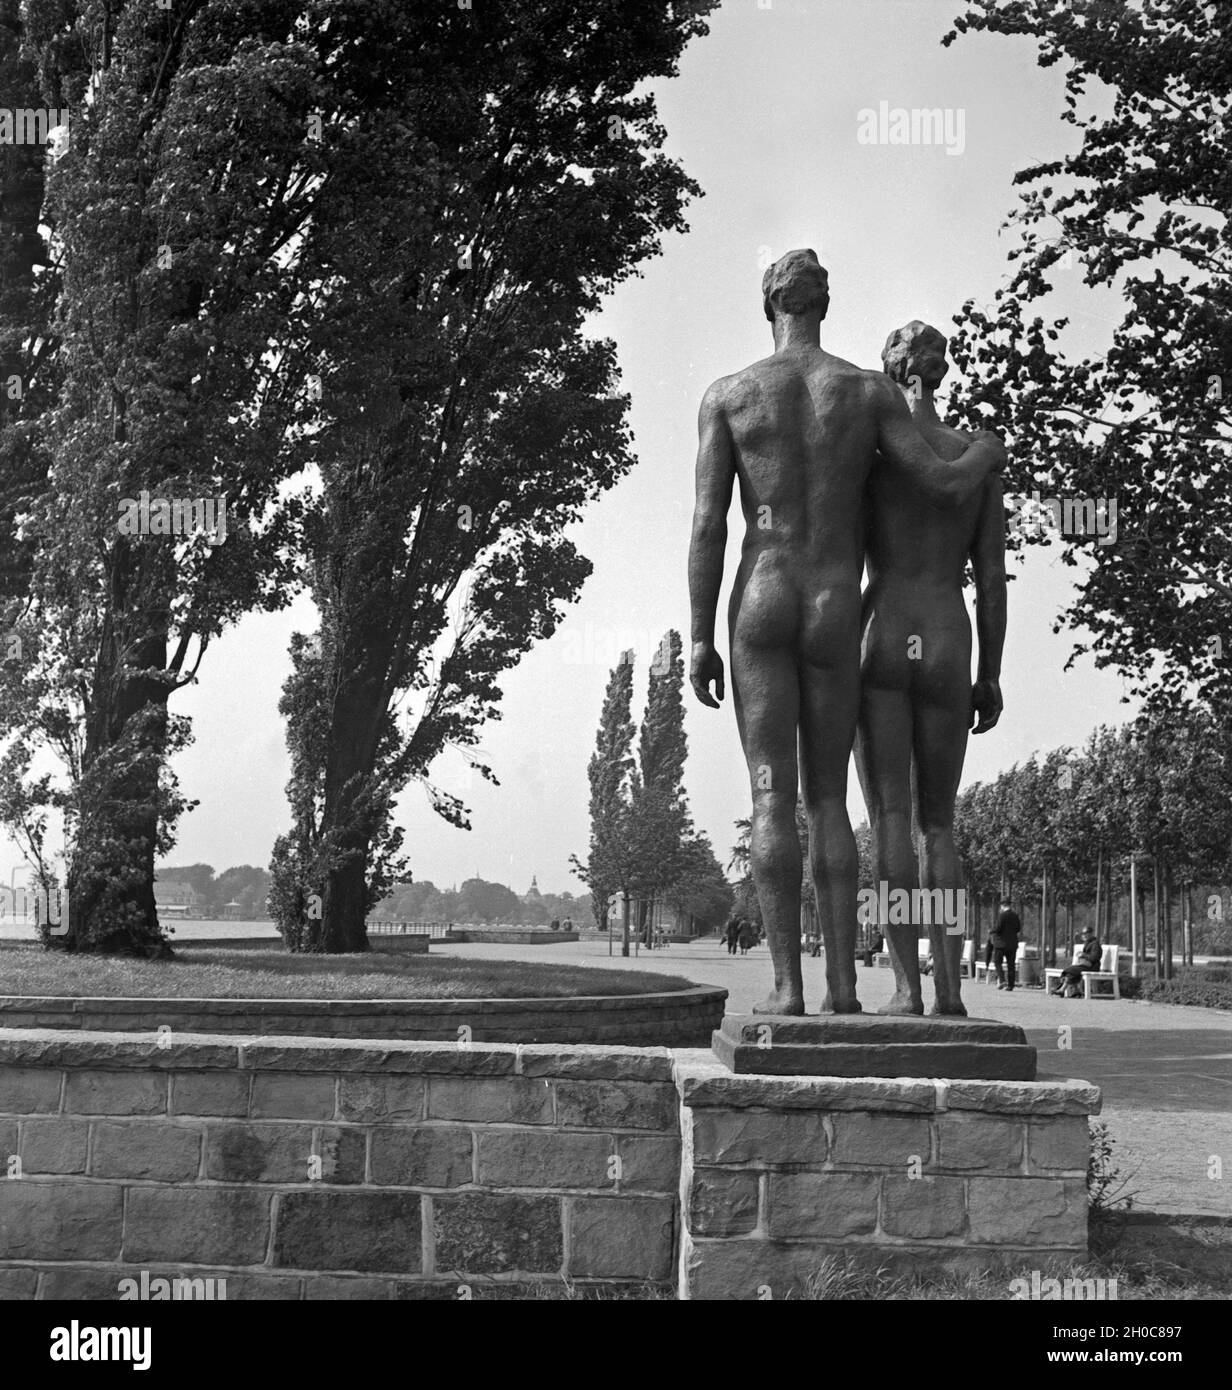 Die Skulptur 'Paar' des Bildhauers Georg Kolbe à Hannover, Deutschland 1930er Jahre. La sculpture 'couple' de l'artiste Georg Kolbe à Hanovre, Allemagne 1930. Banque D'Images